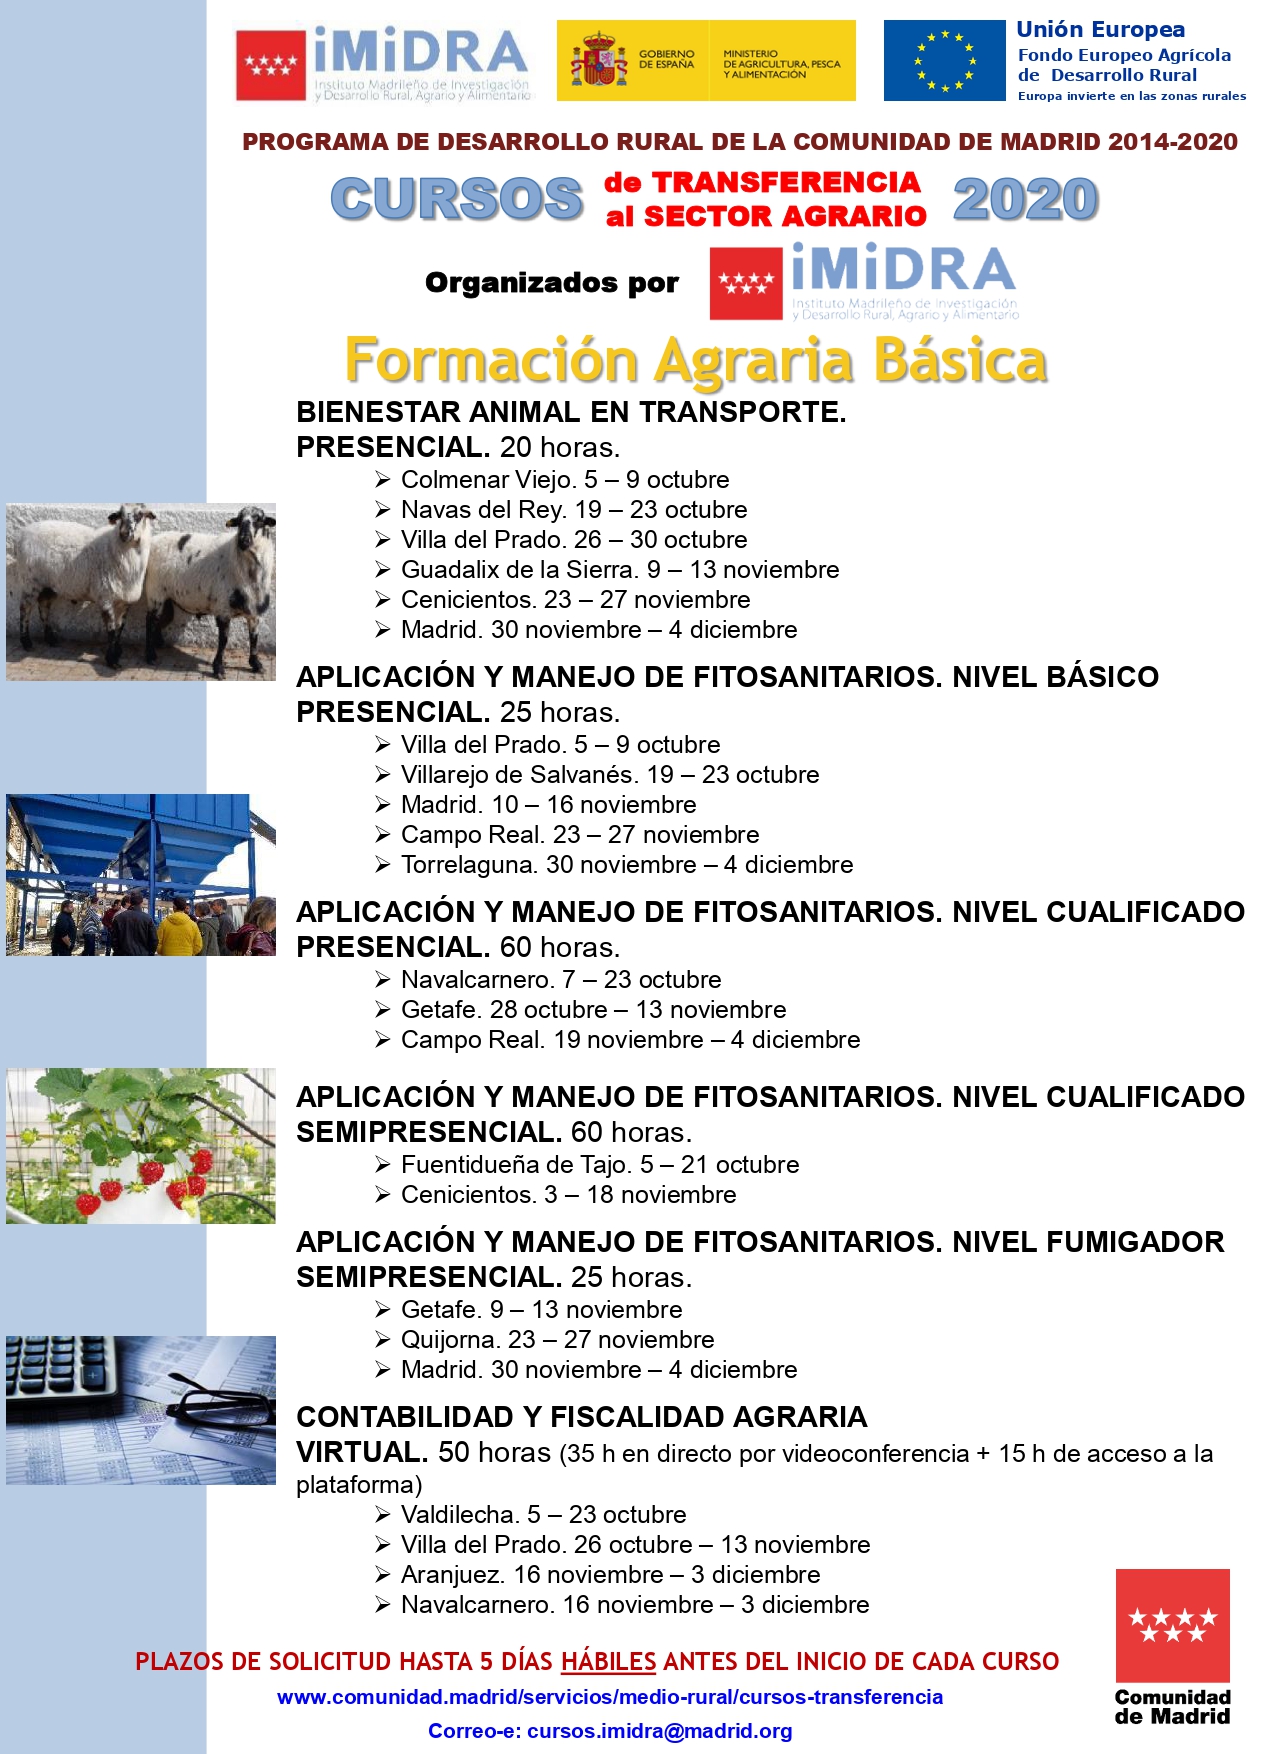 Cartel_cursos_formacion_agraria_basica_IMIDRA_2020_page-0001.jpg - 1,018.79 kB